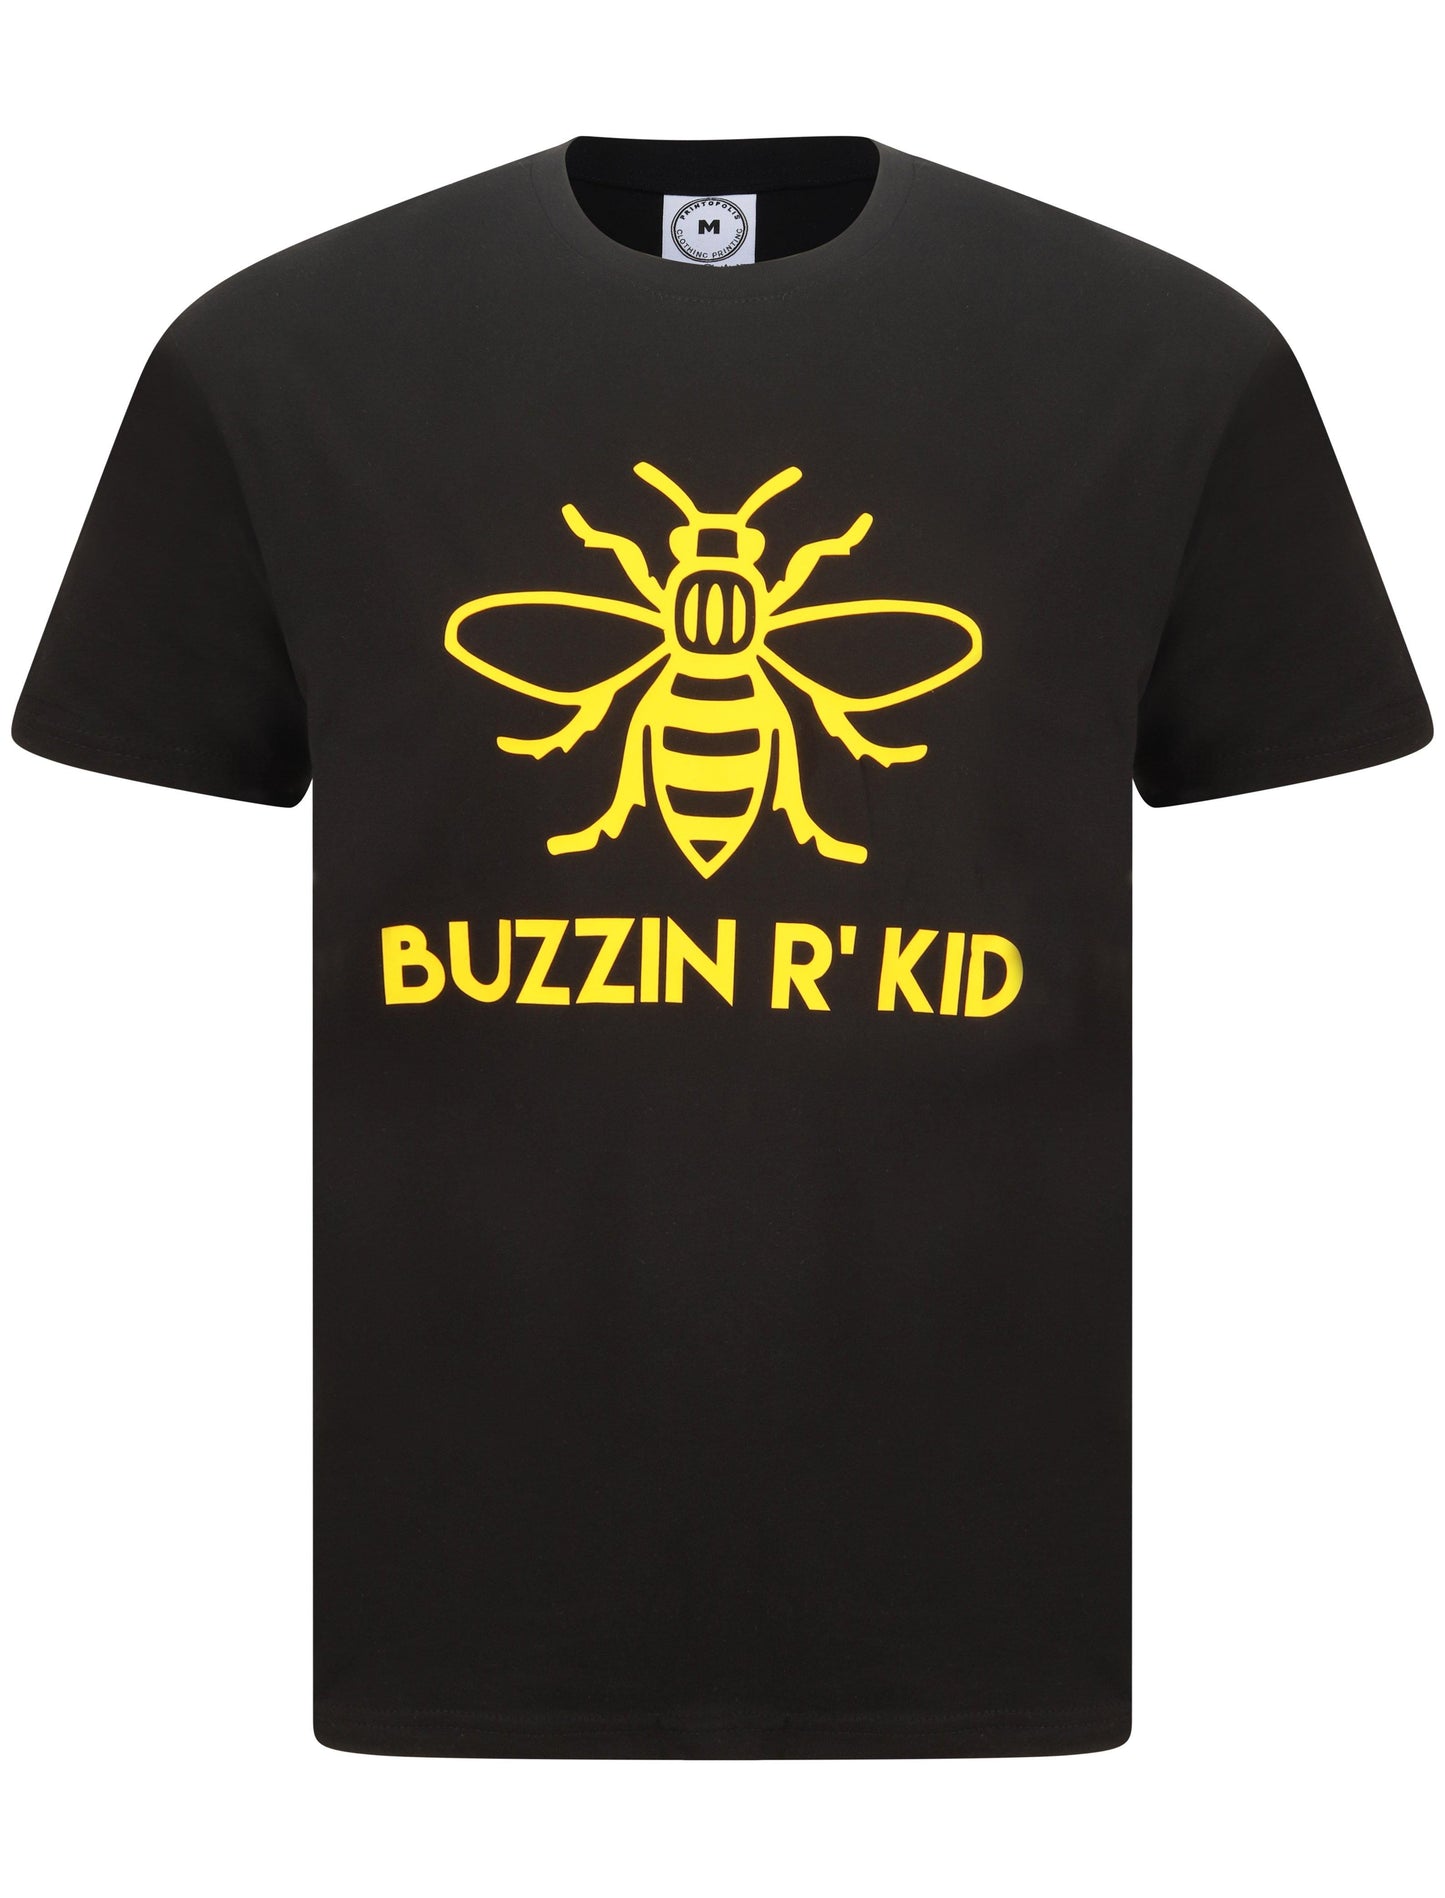 Buzzin' R Kid T-Shirt - Unisex - The Manchester Shop